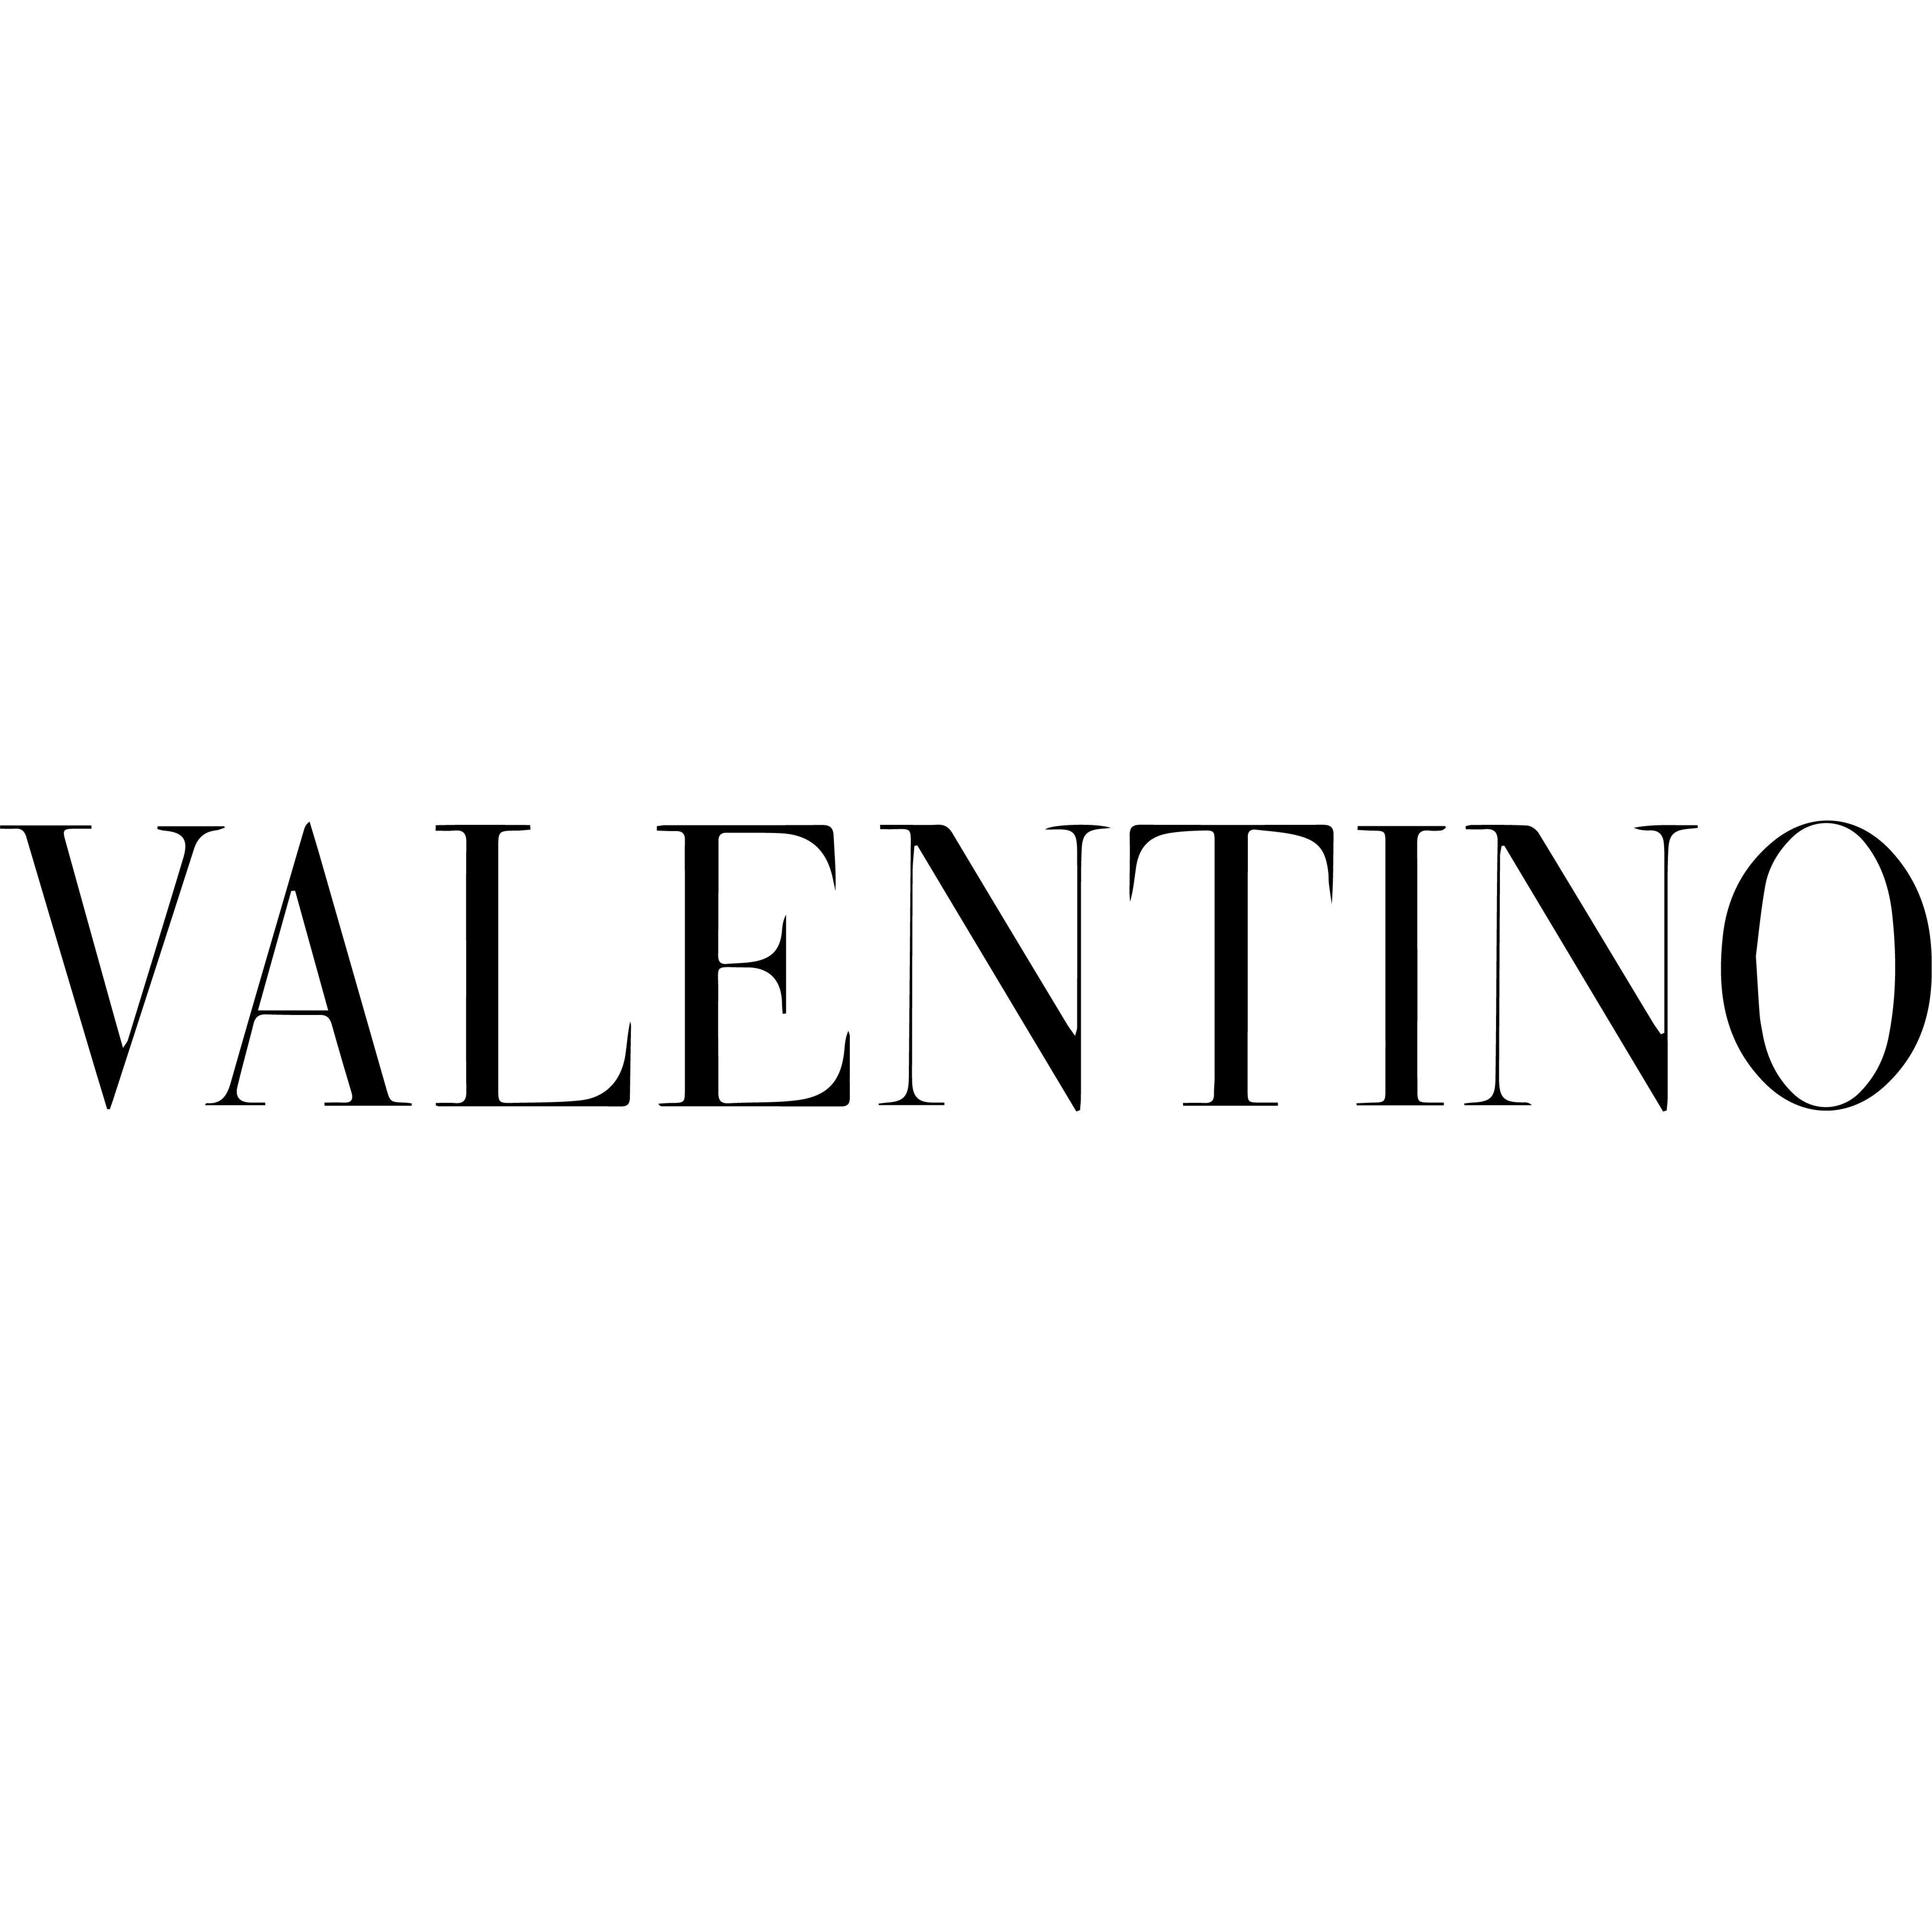 Poudre, Valentino, Perfume Samples, Scent Samples